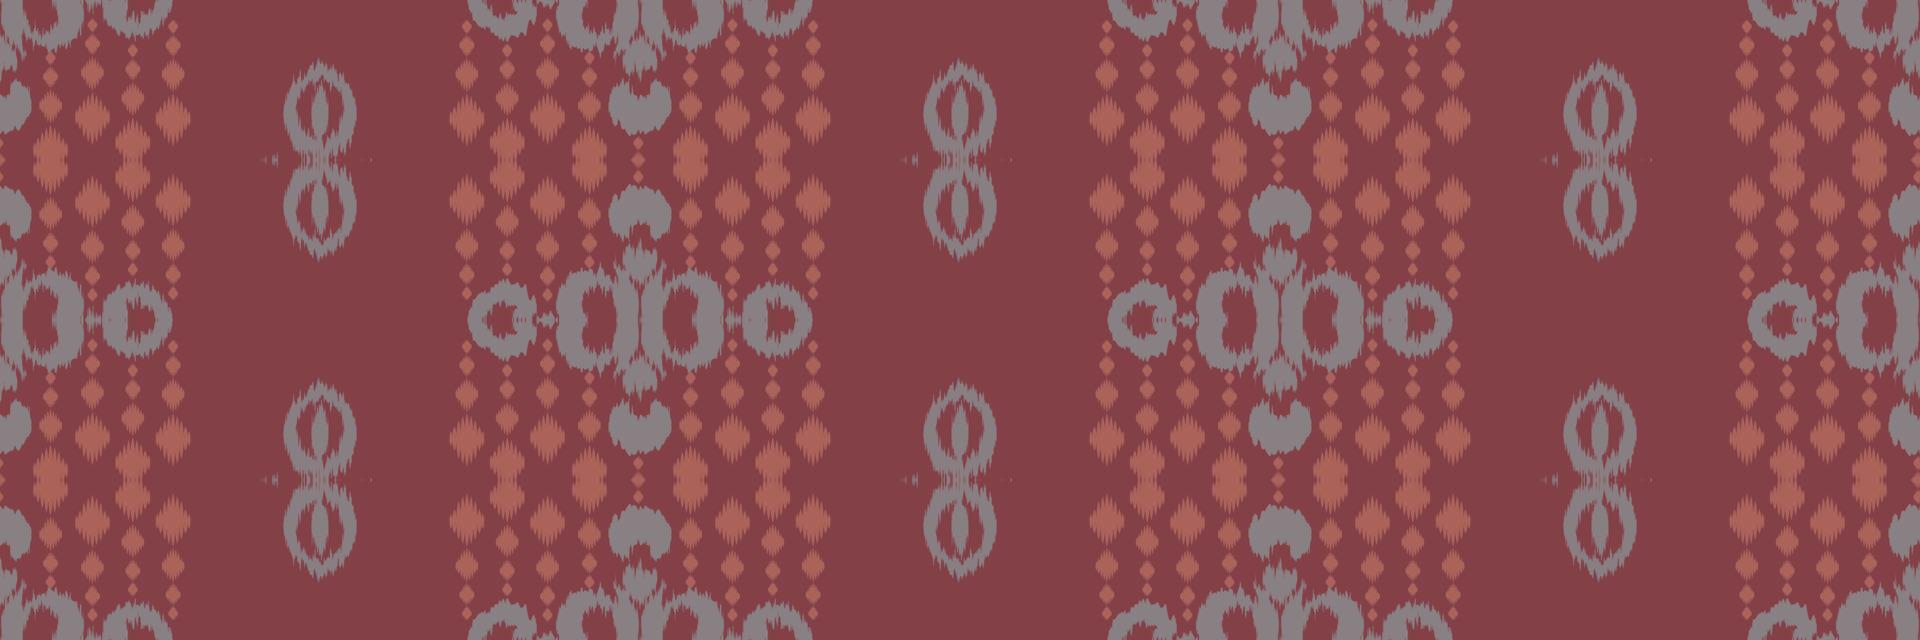 batik têxtil ikat listra sem costura padrão design de vetor digital para impressão saree kurti borneo tecido borda pincel símbolos amostras elegantes